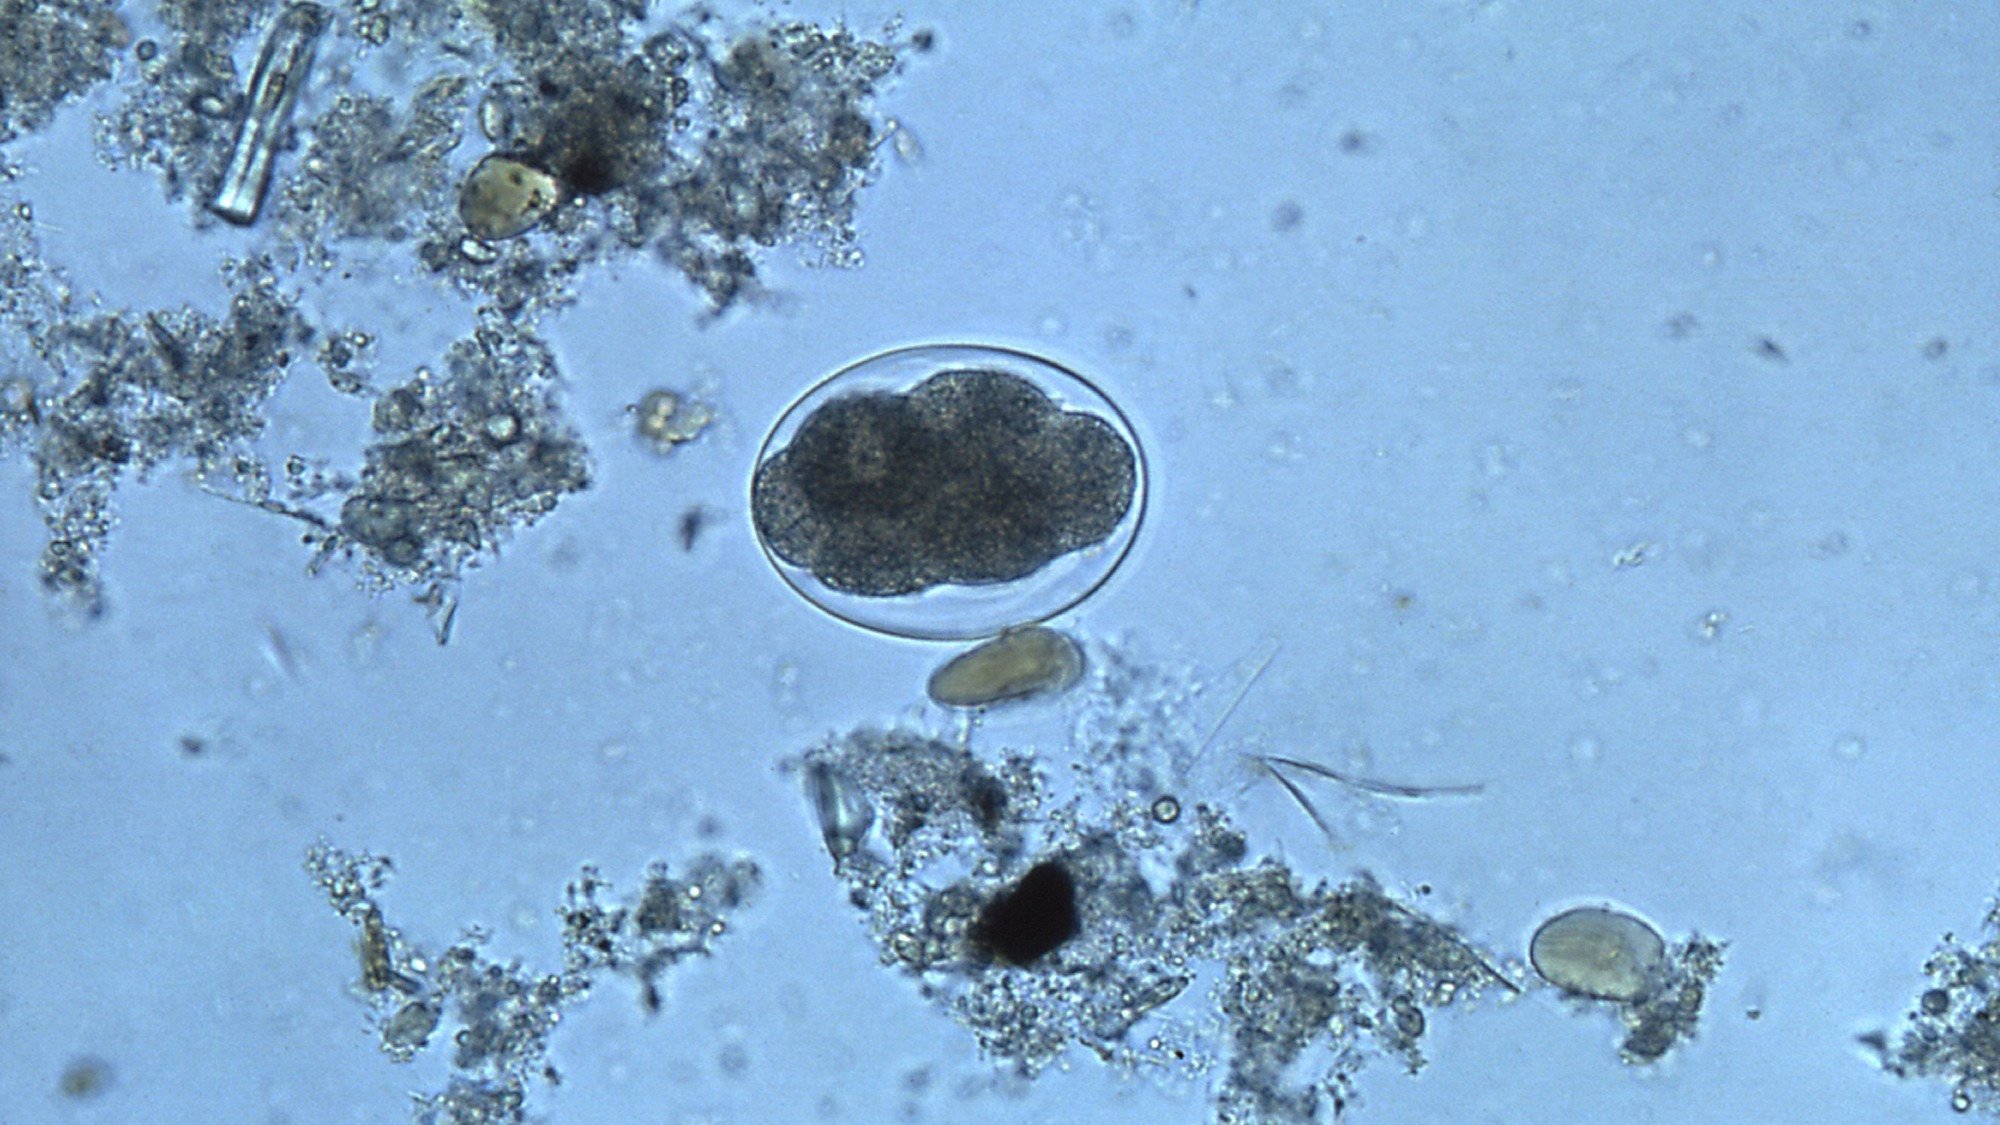 microscopic image of a hookworm egg